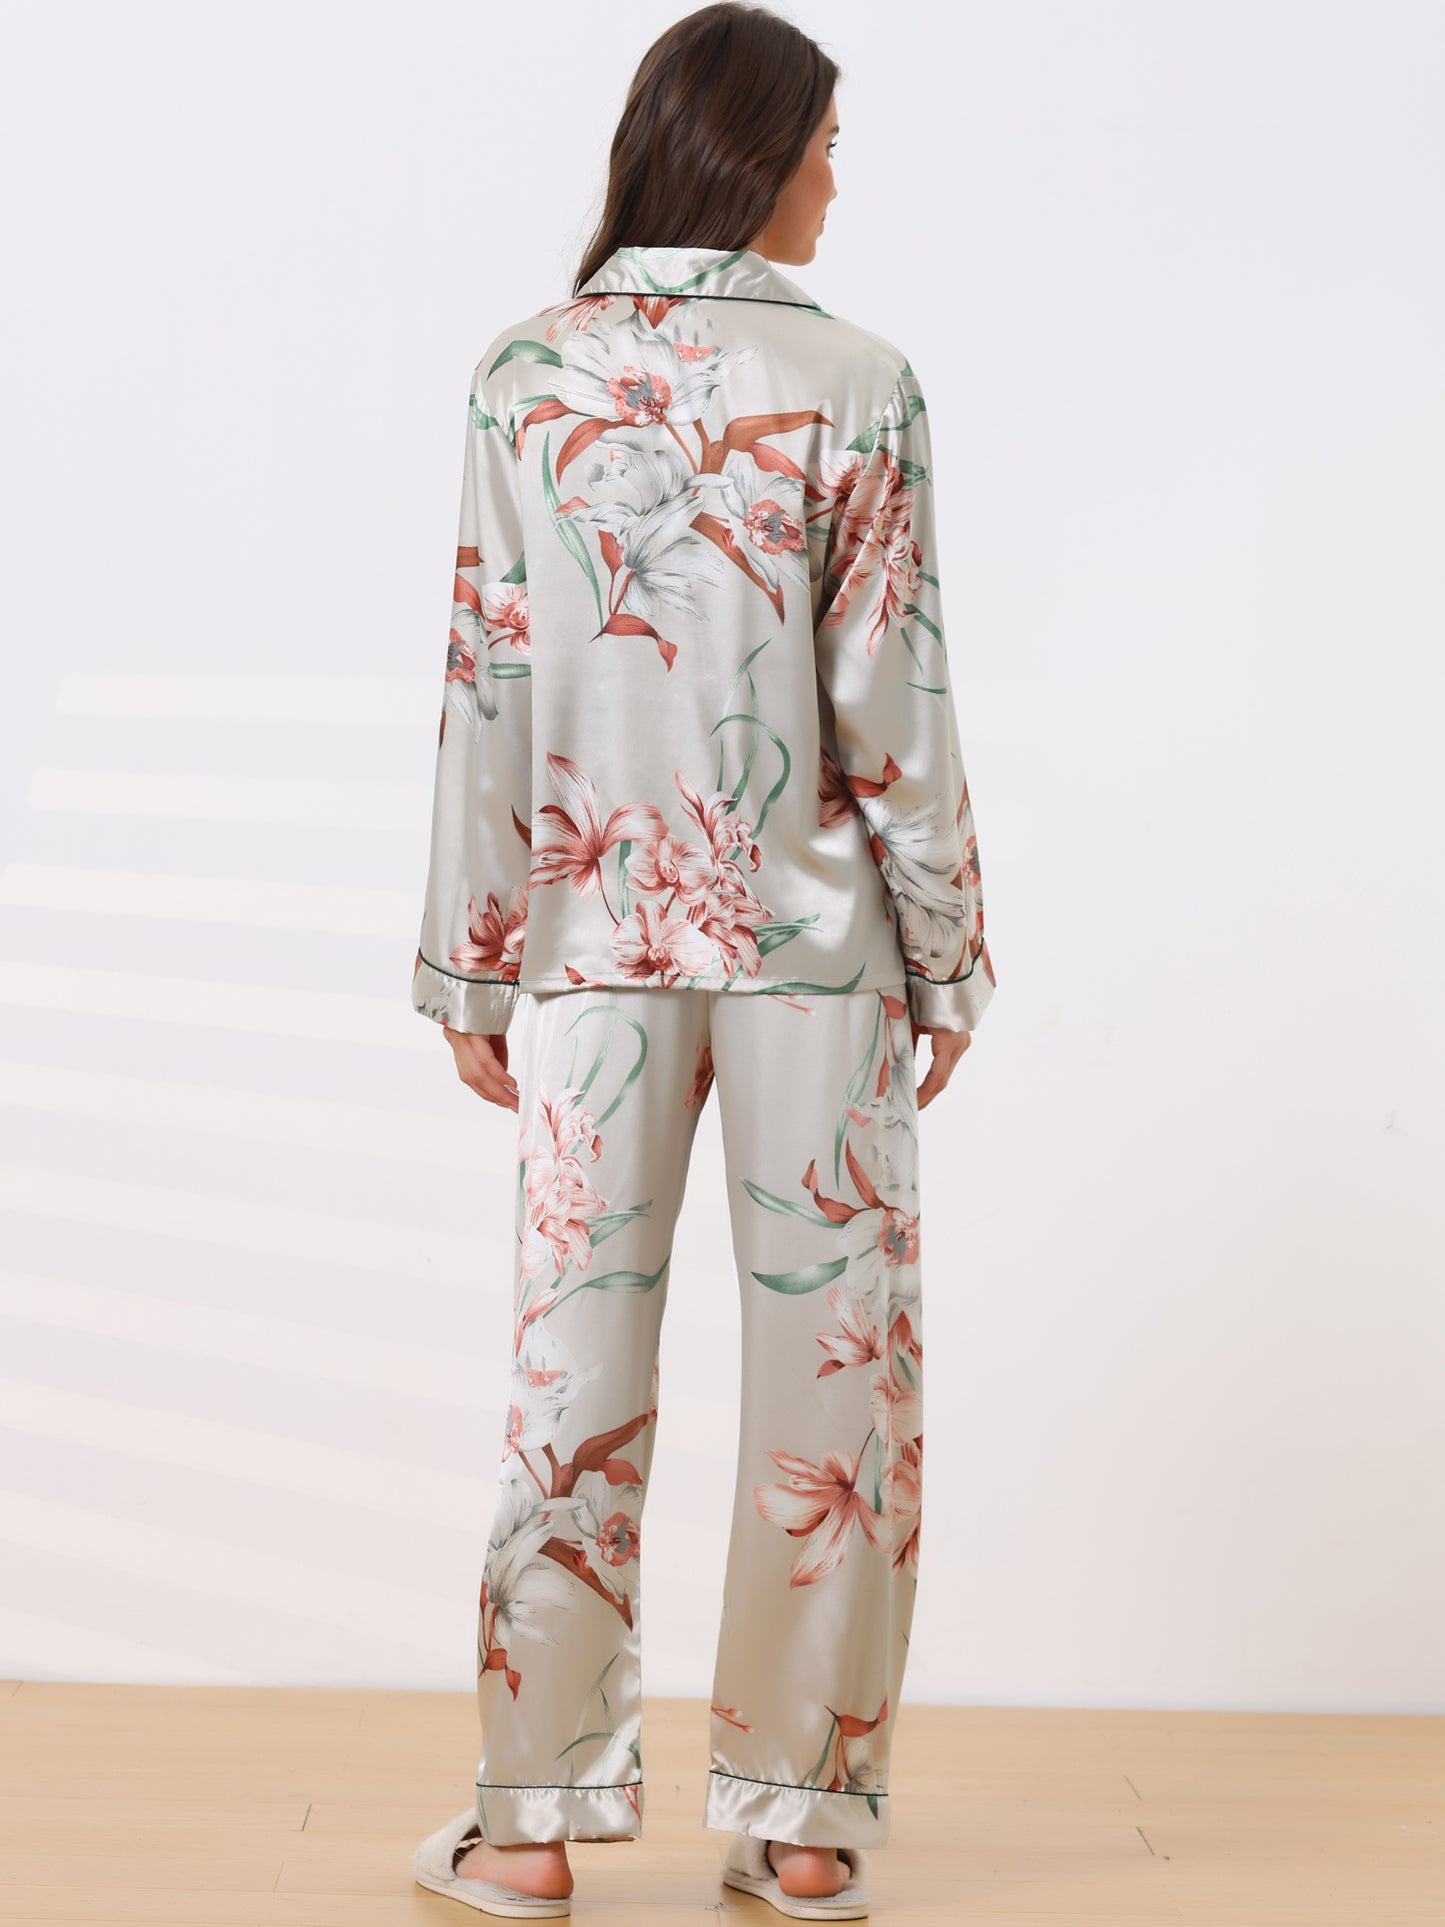 cheibear Pajama Sleep Shirt Nightwear Sleepwear Lounge Satin Pj Sets Gray